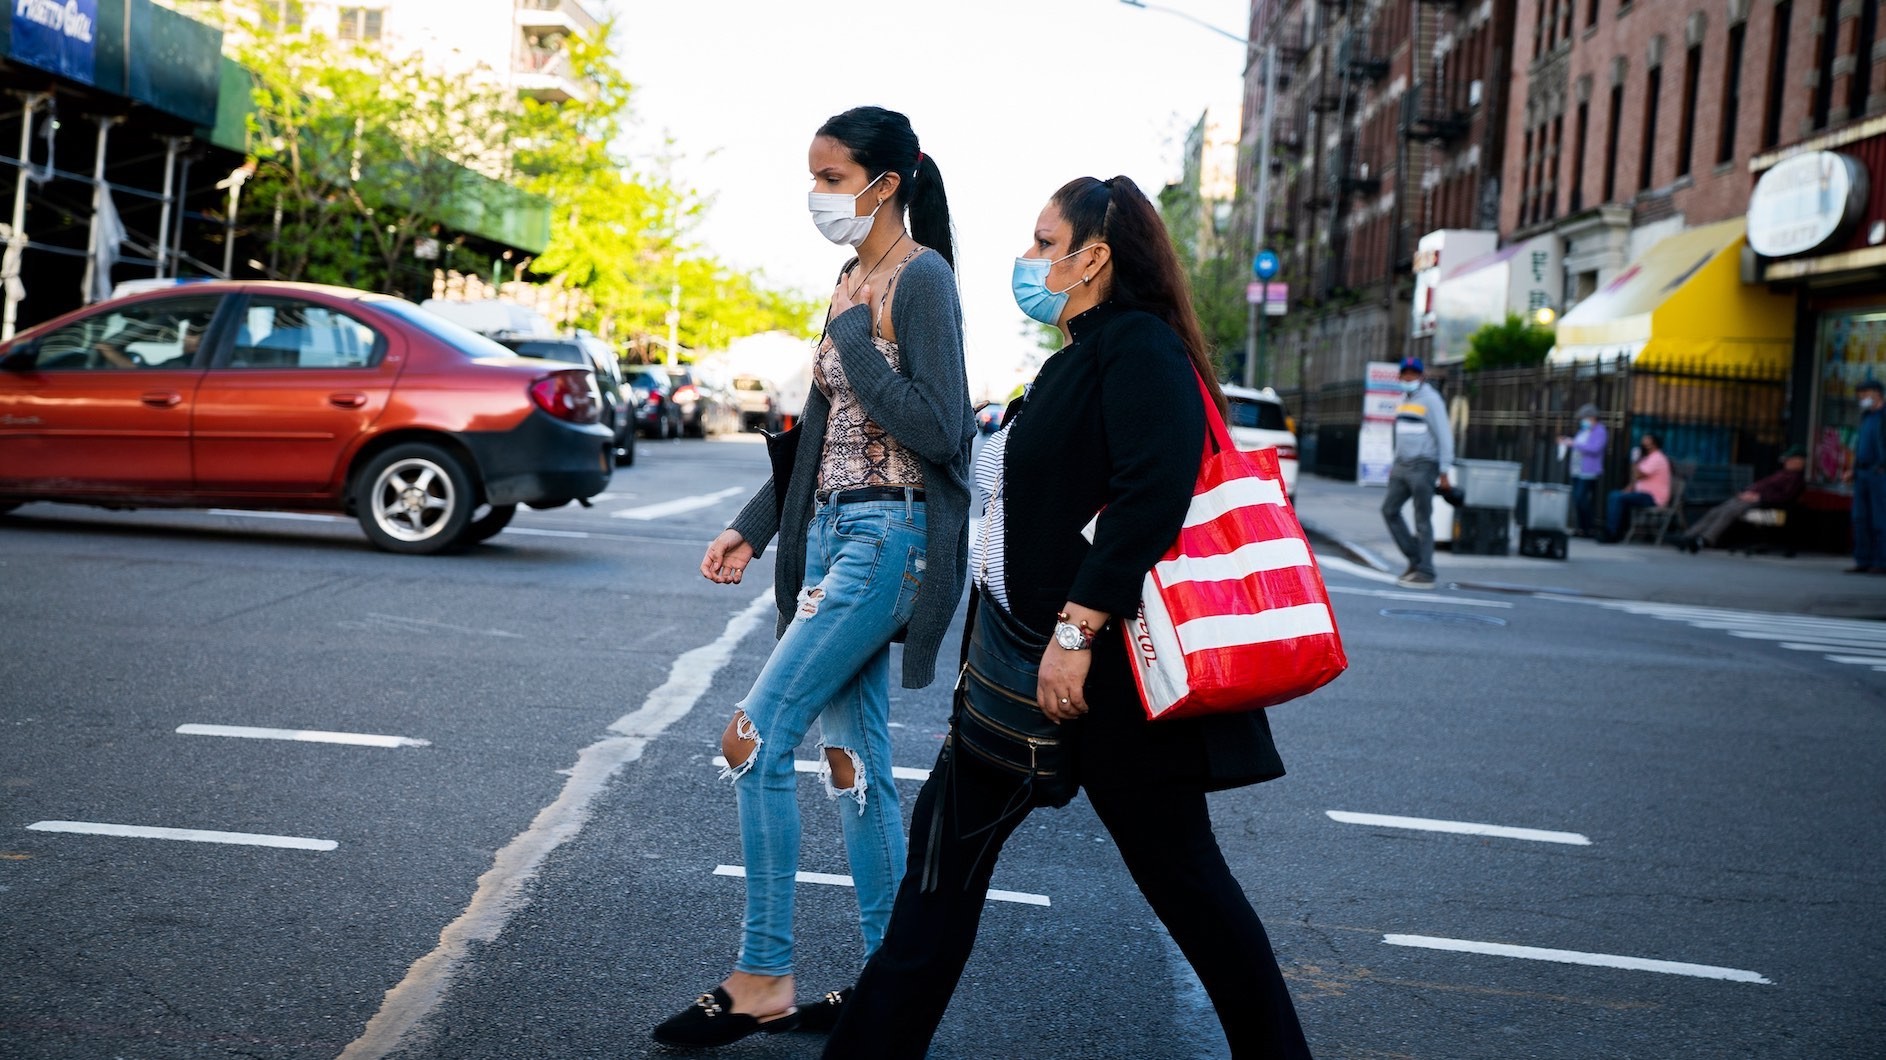 Two women walking in the street in NYC wearing face masks